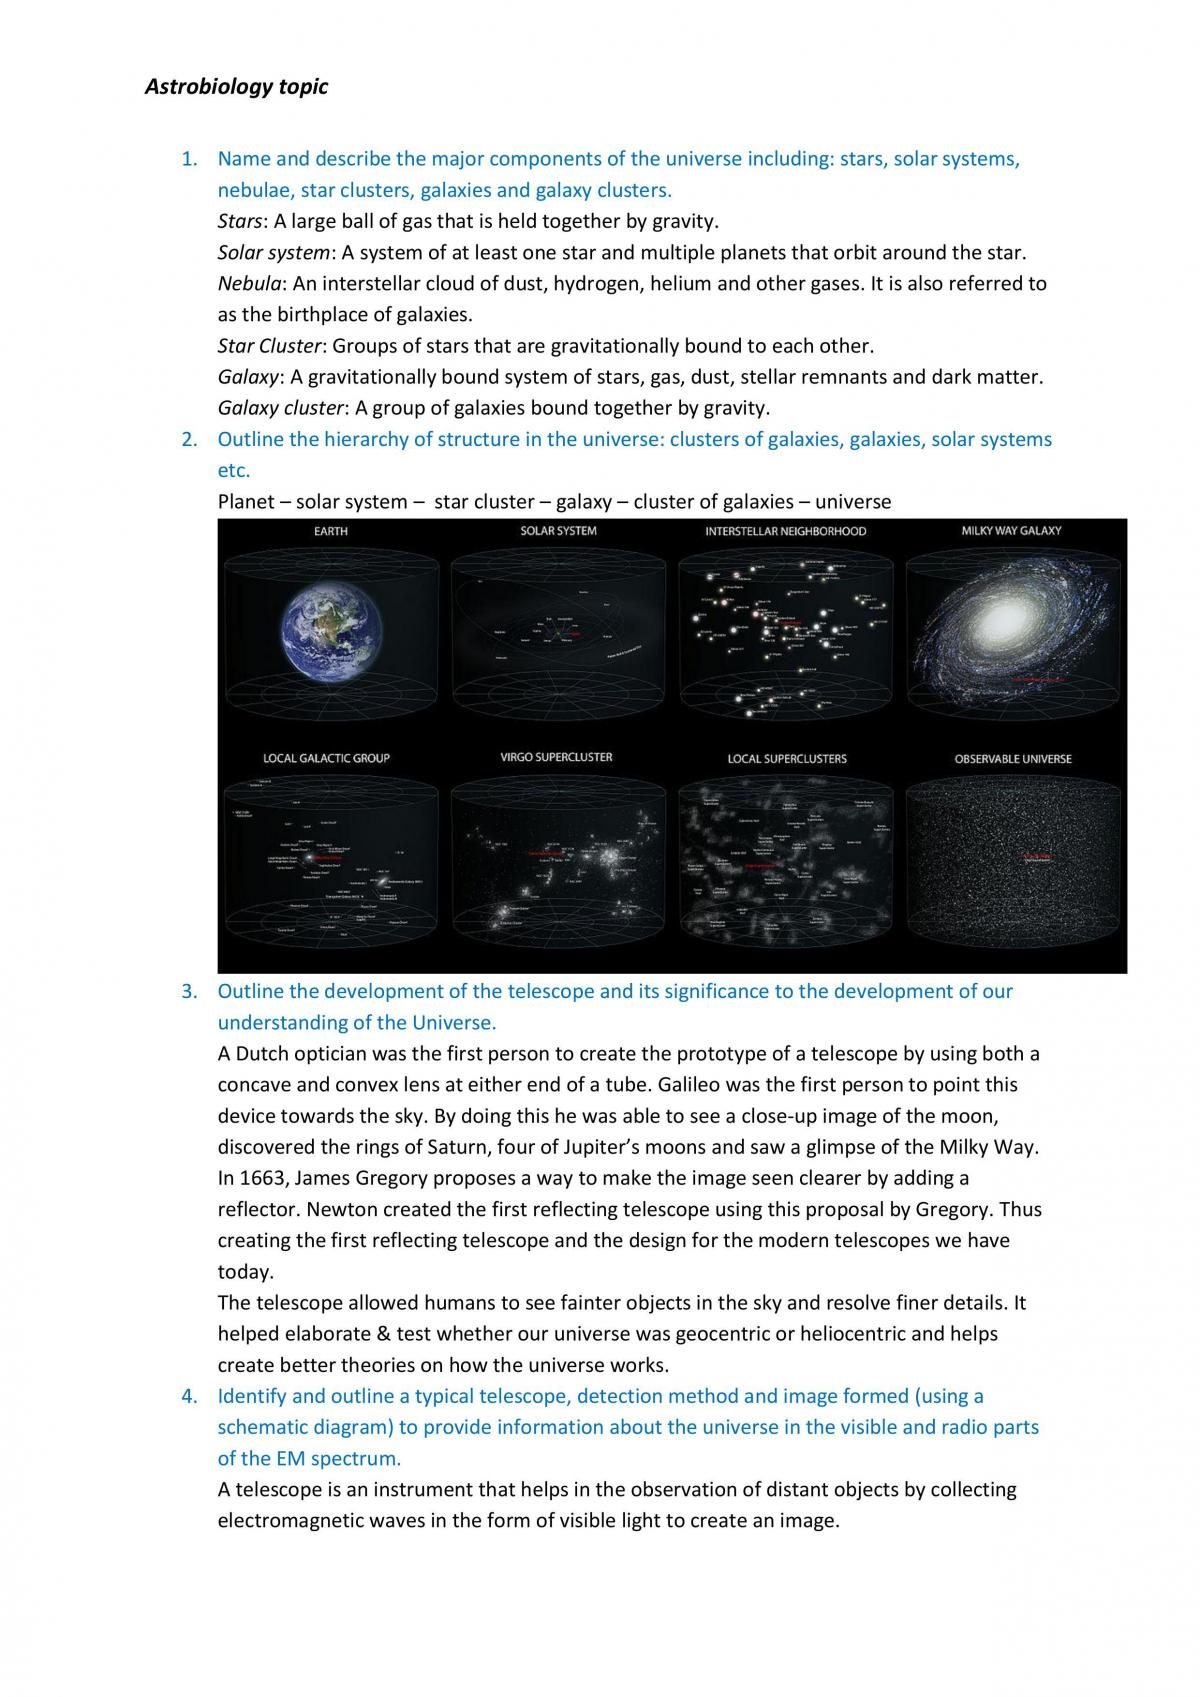 Astrobiology Topic Indicators | Biology - Year 11 HSC | Thinkswap